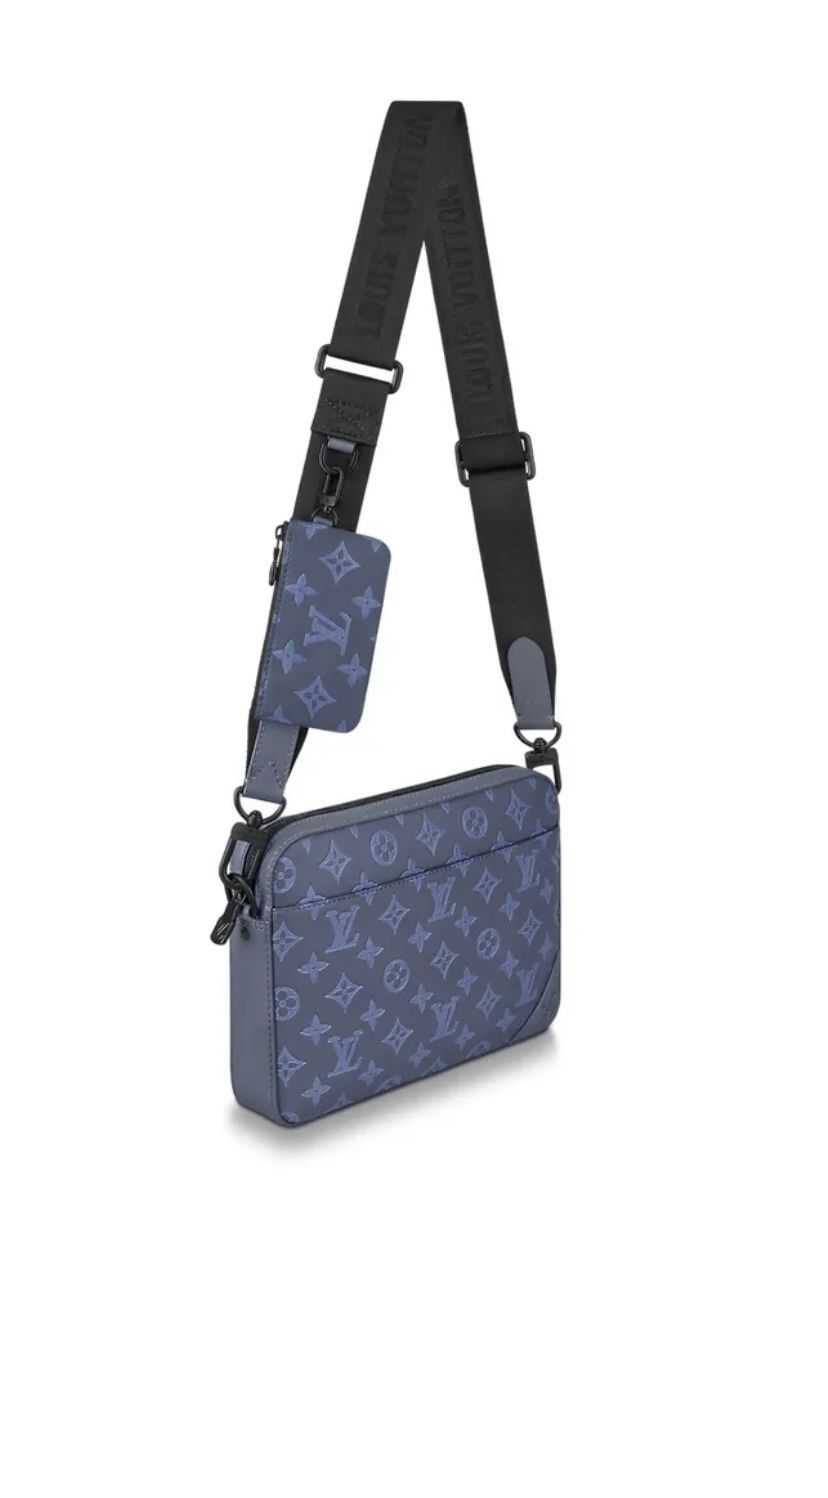 Louis Vuitton Duo Messenger Bag for Sale in Lake Elsinore, CA